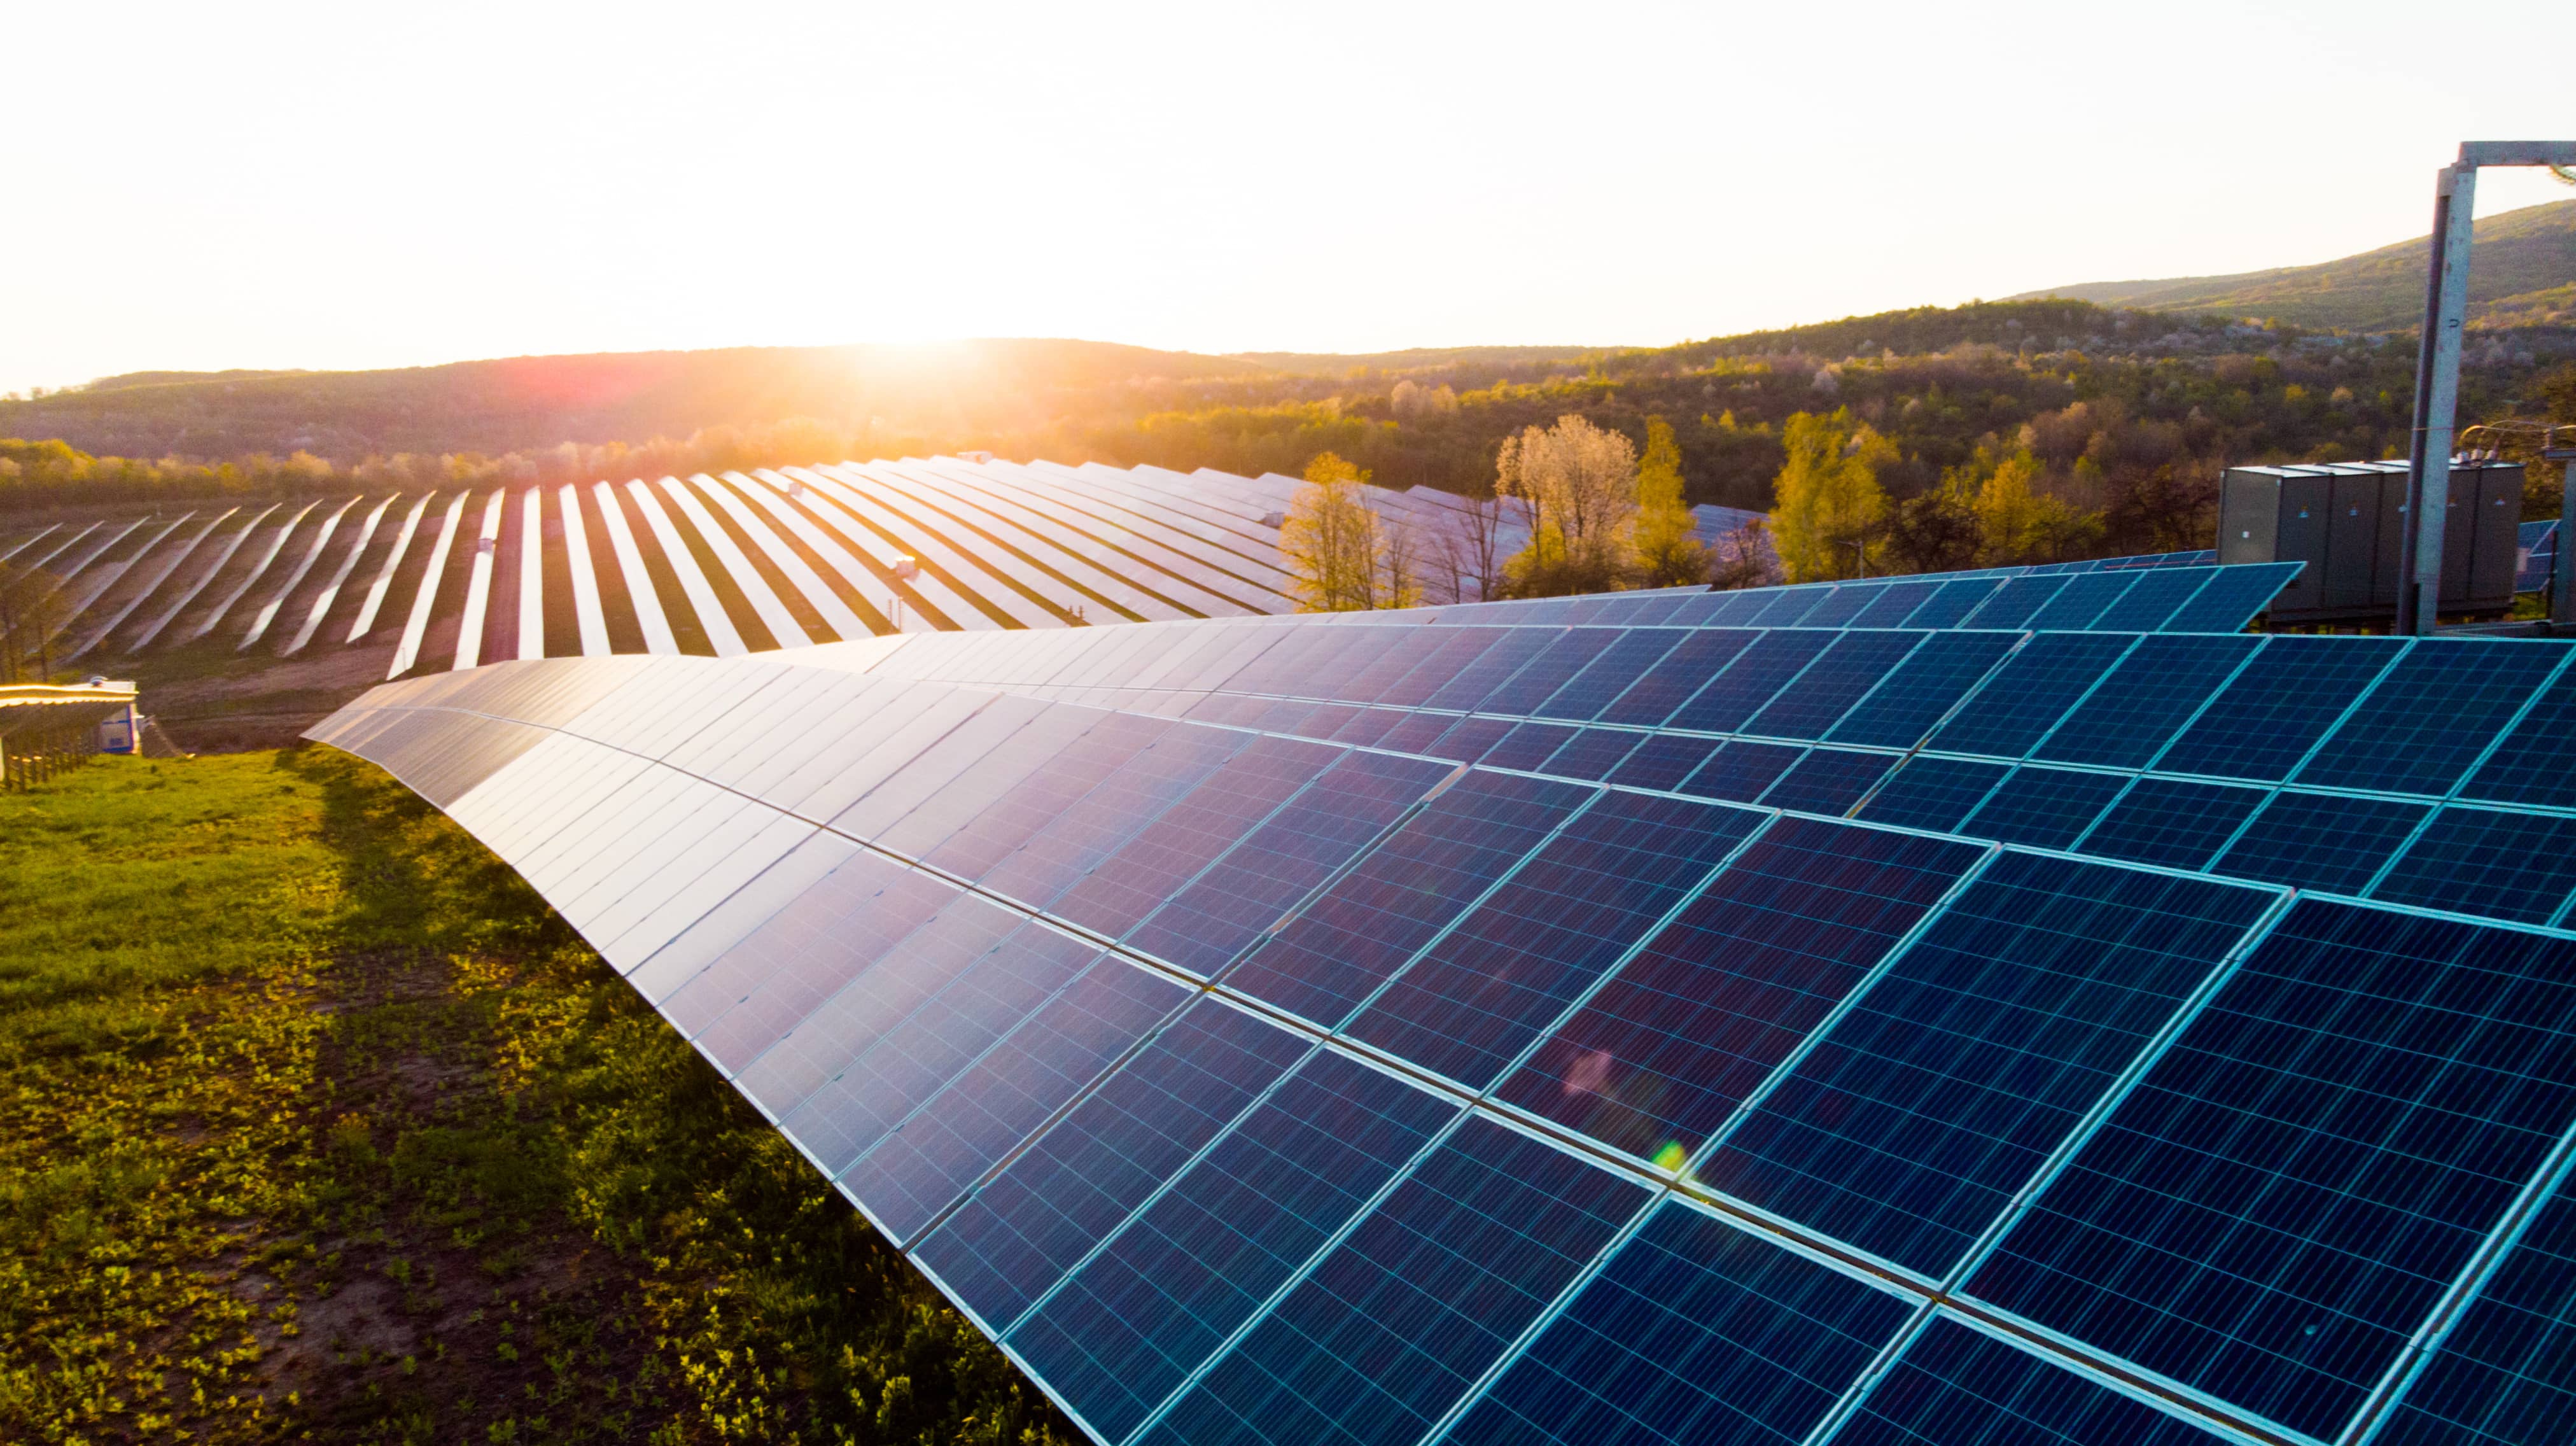 consumers-energy-seeks-landowners-communities-to-site-solar-arrays